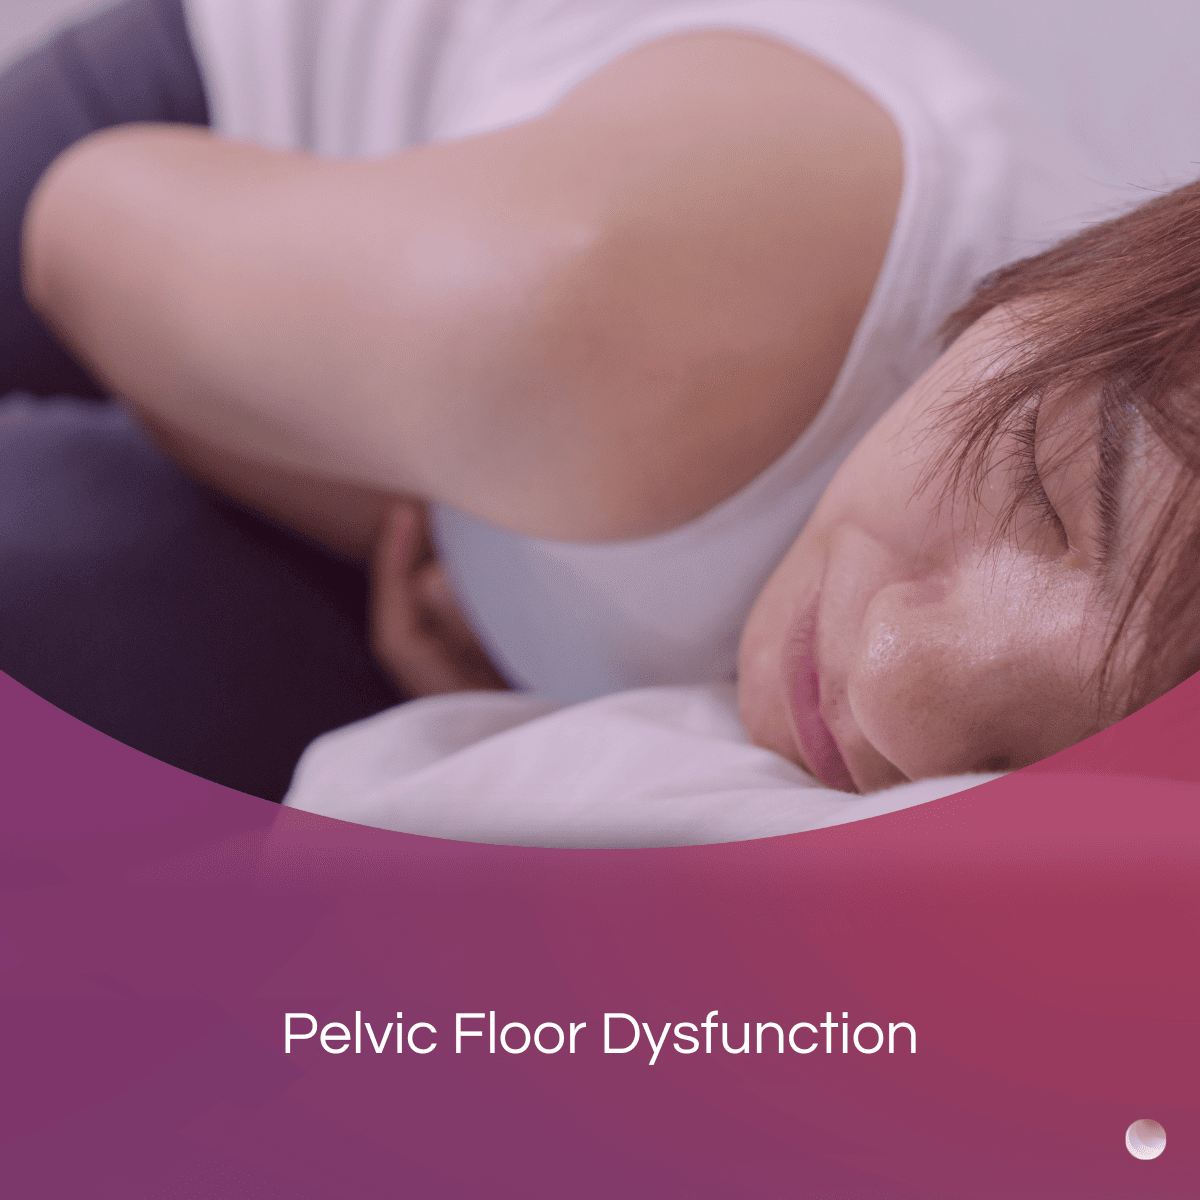 woman suffering from Pelvic Floor Dysfunction